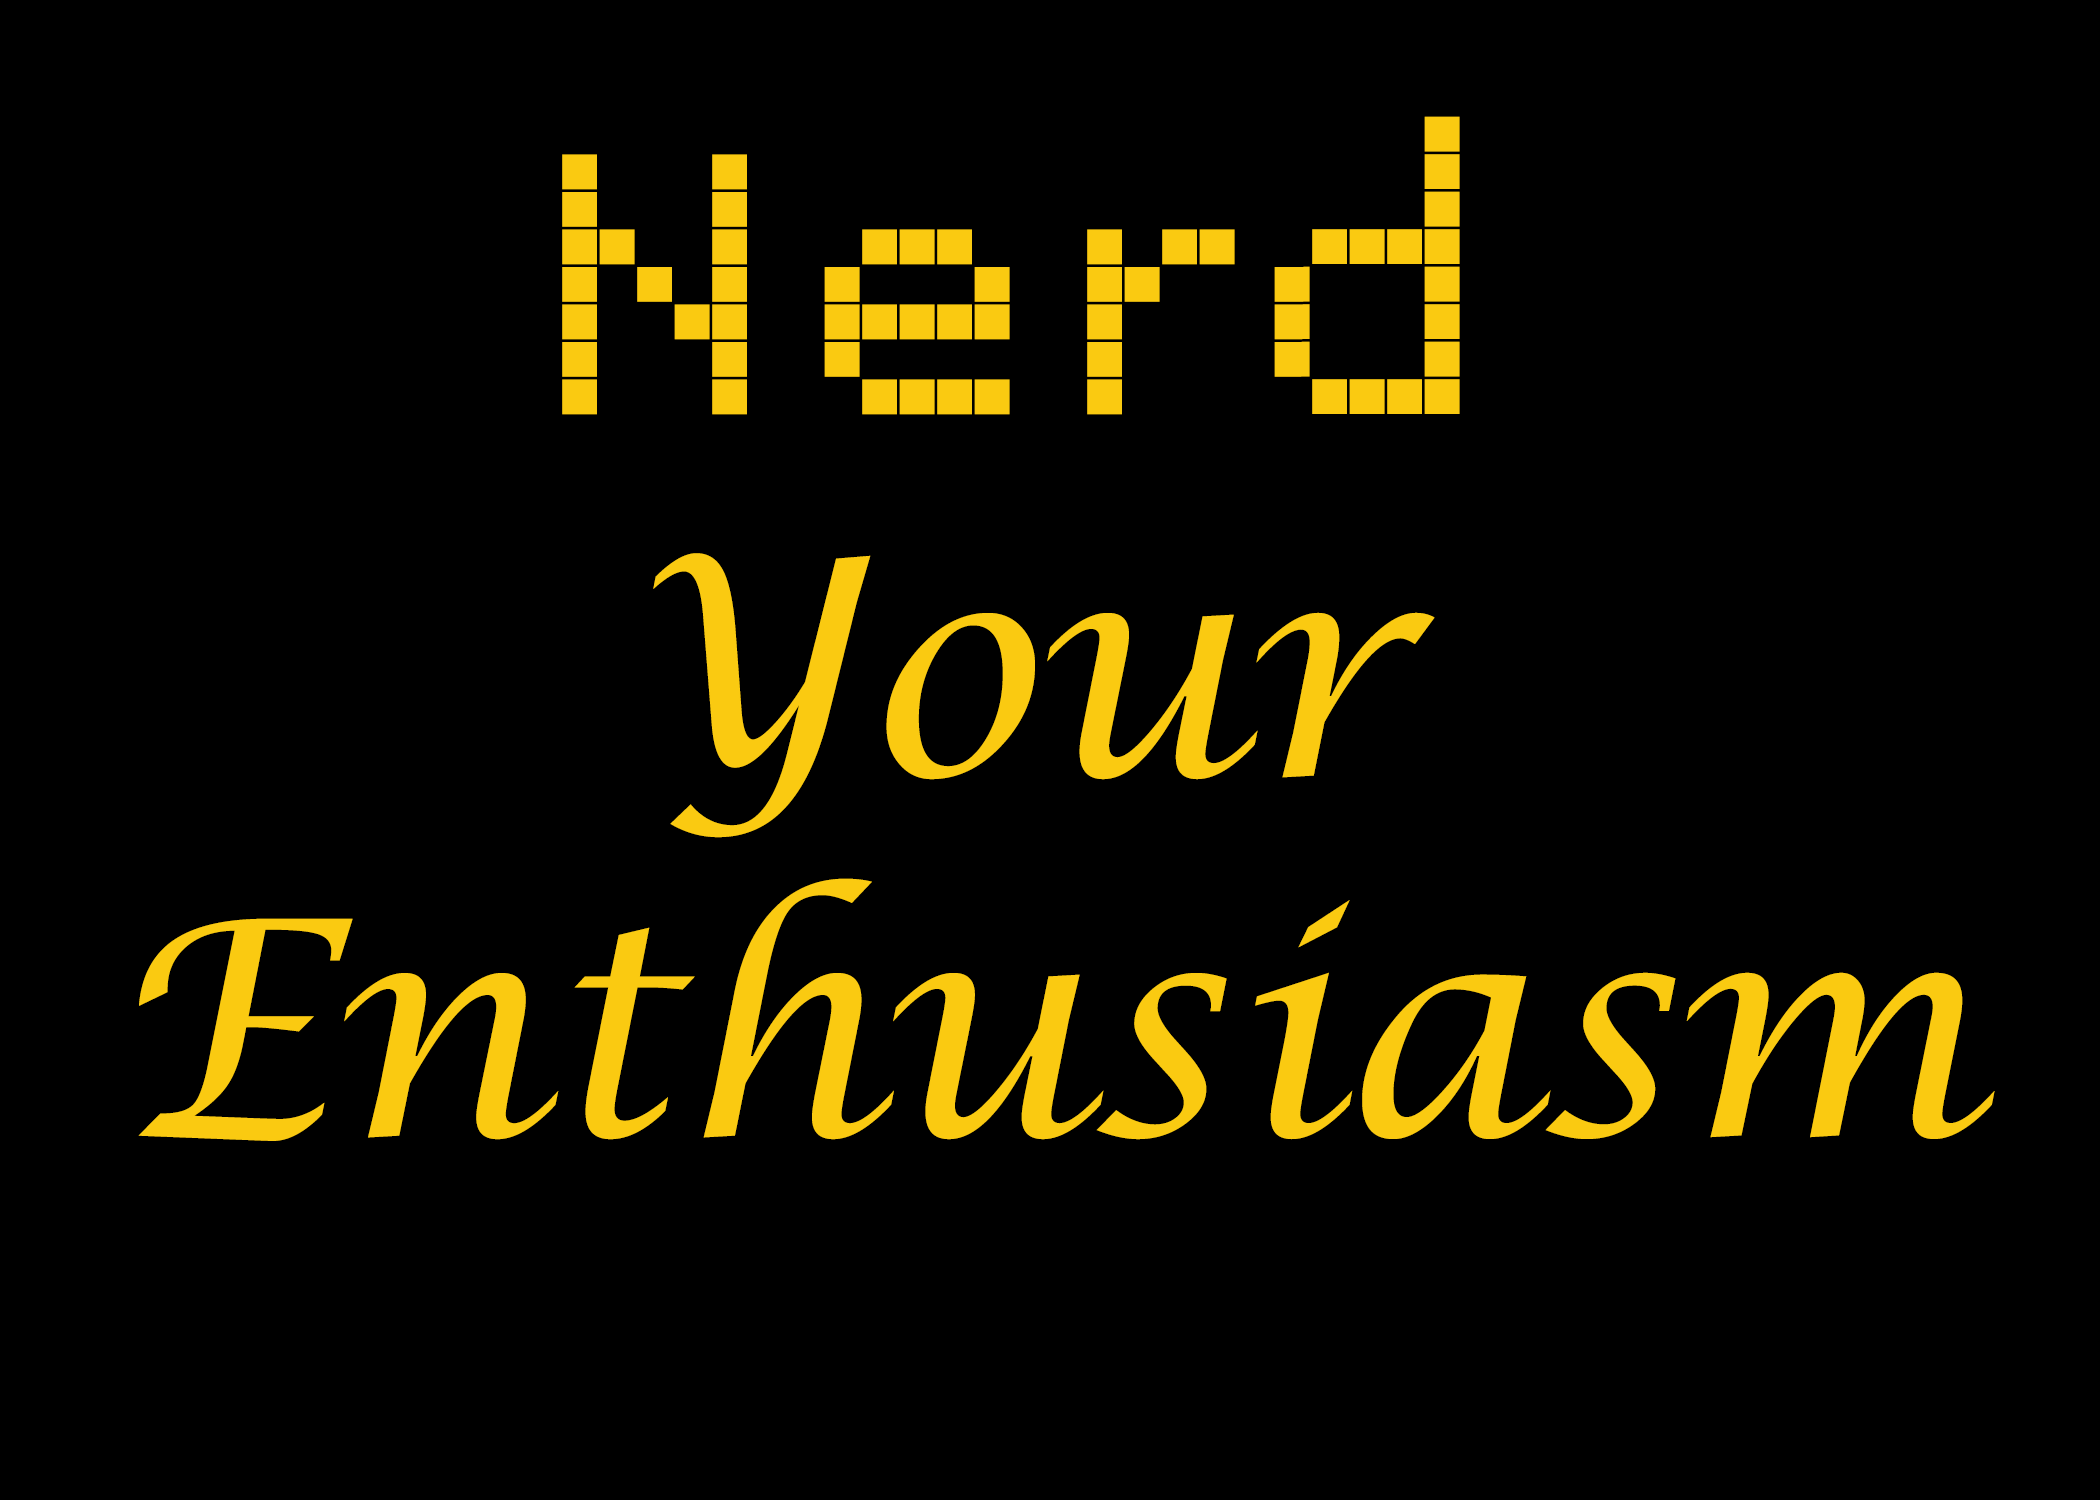 Nerd Your Enthusiasm